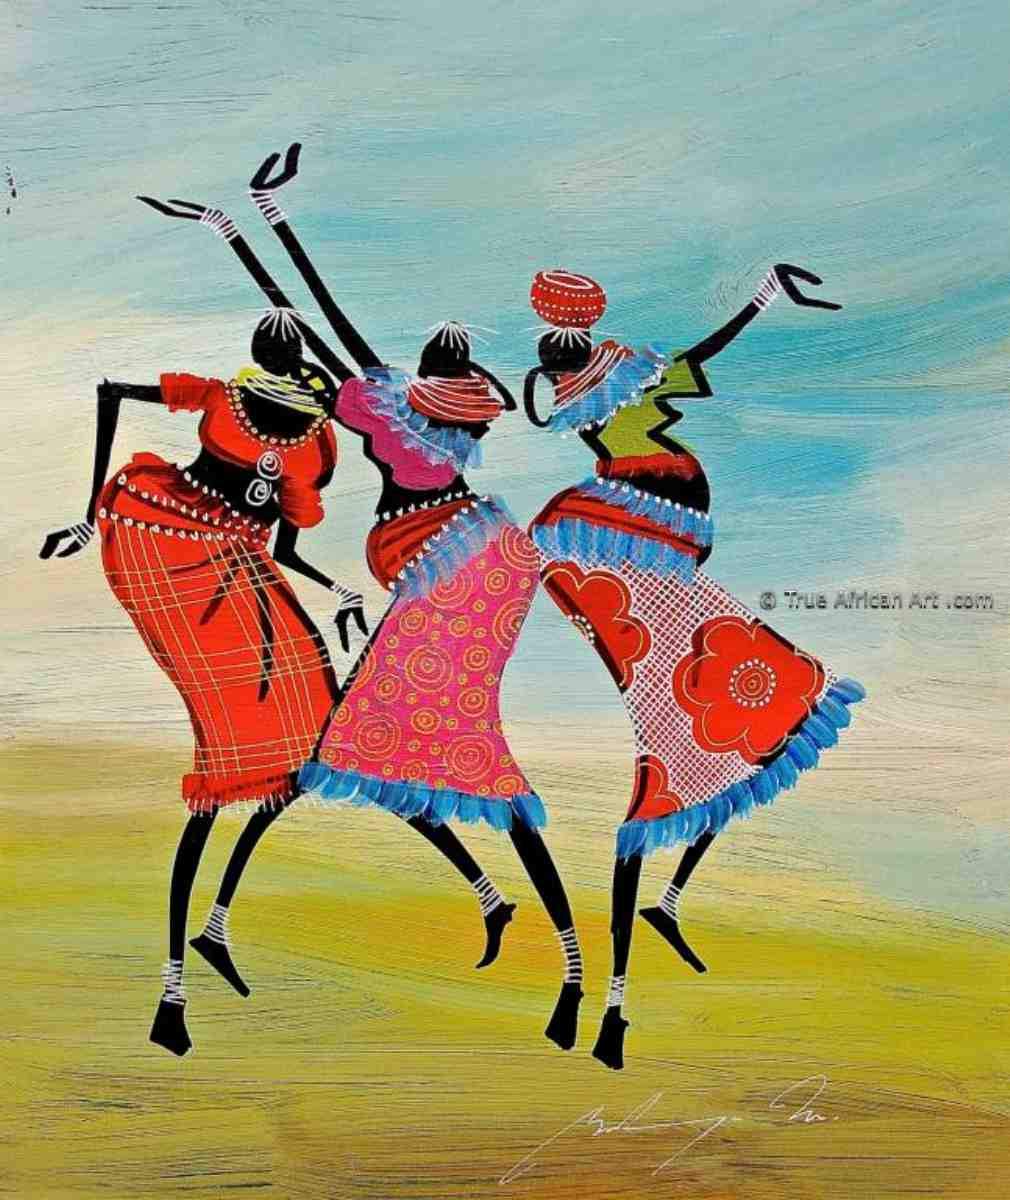 Martin Bulinya  |  Kenya  |  B-290  |  Print  |  True African Art .com